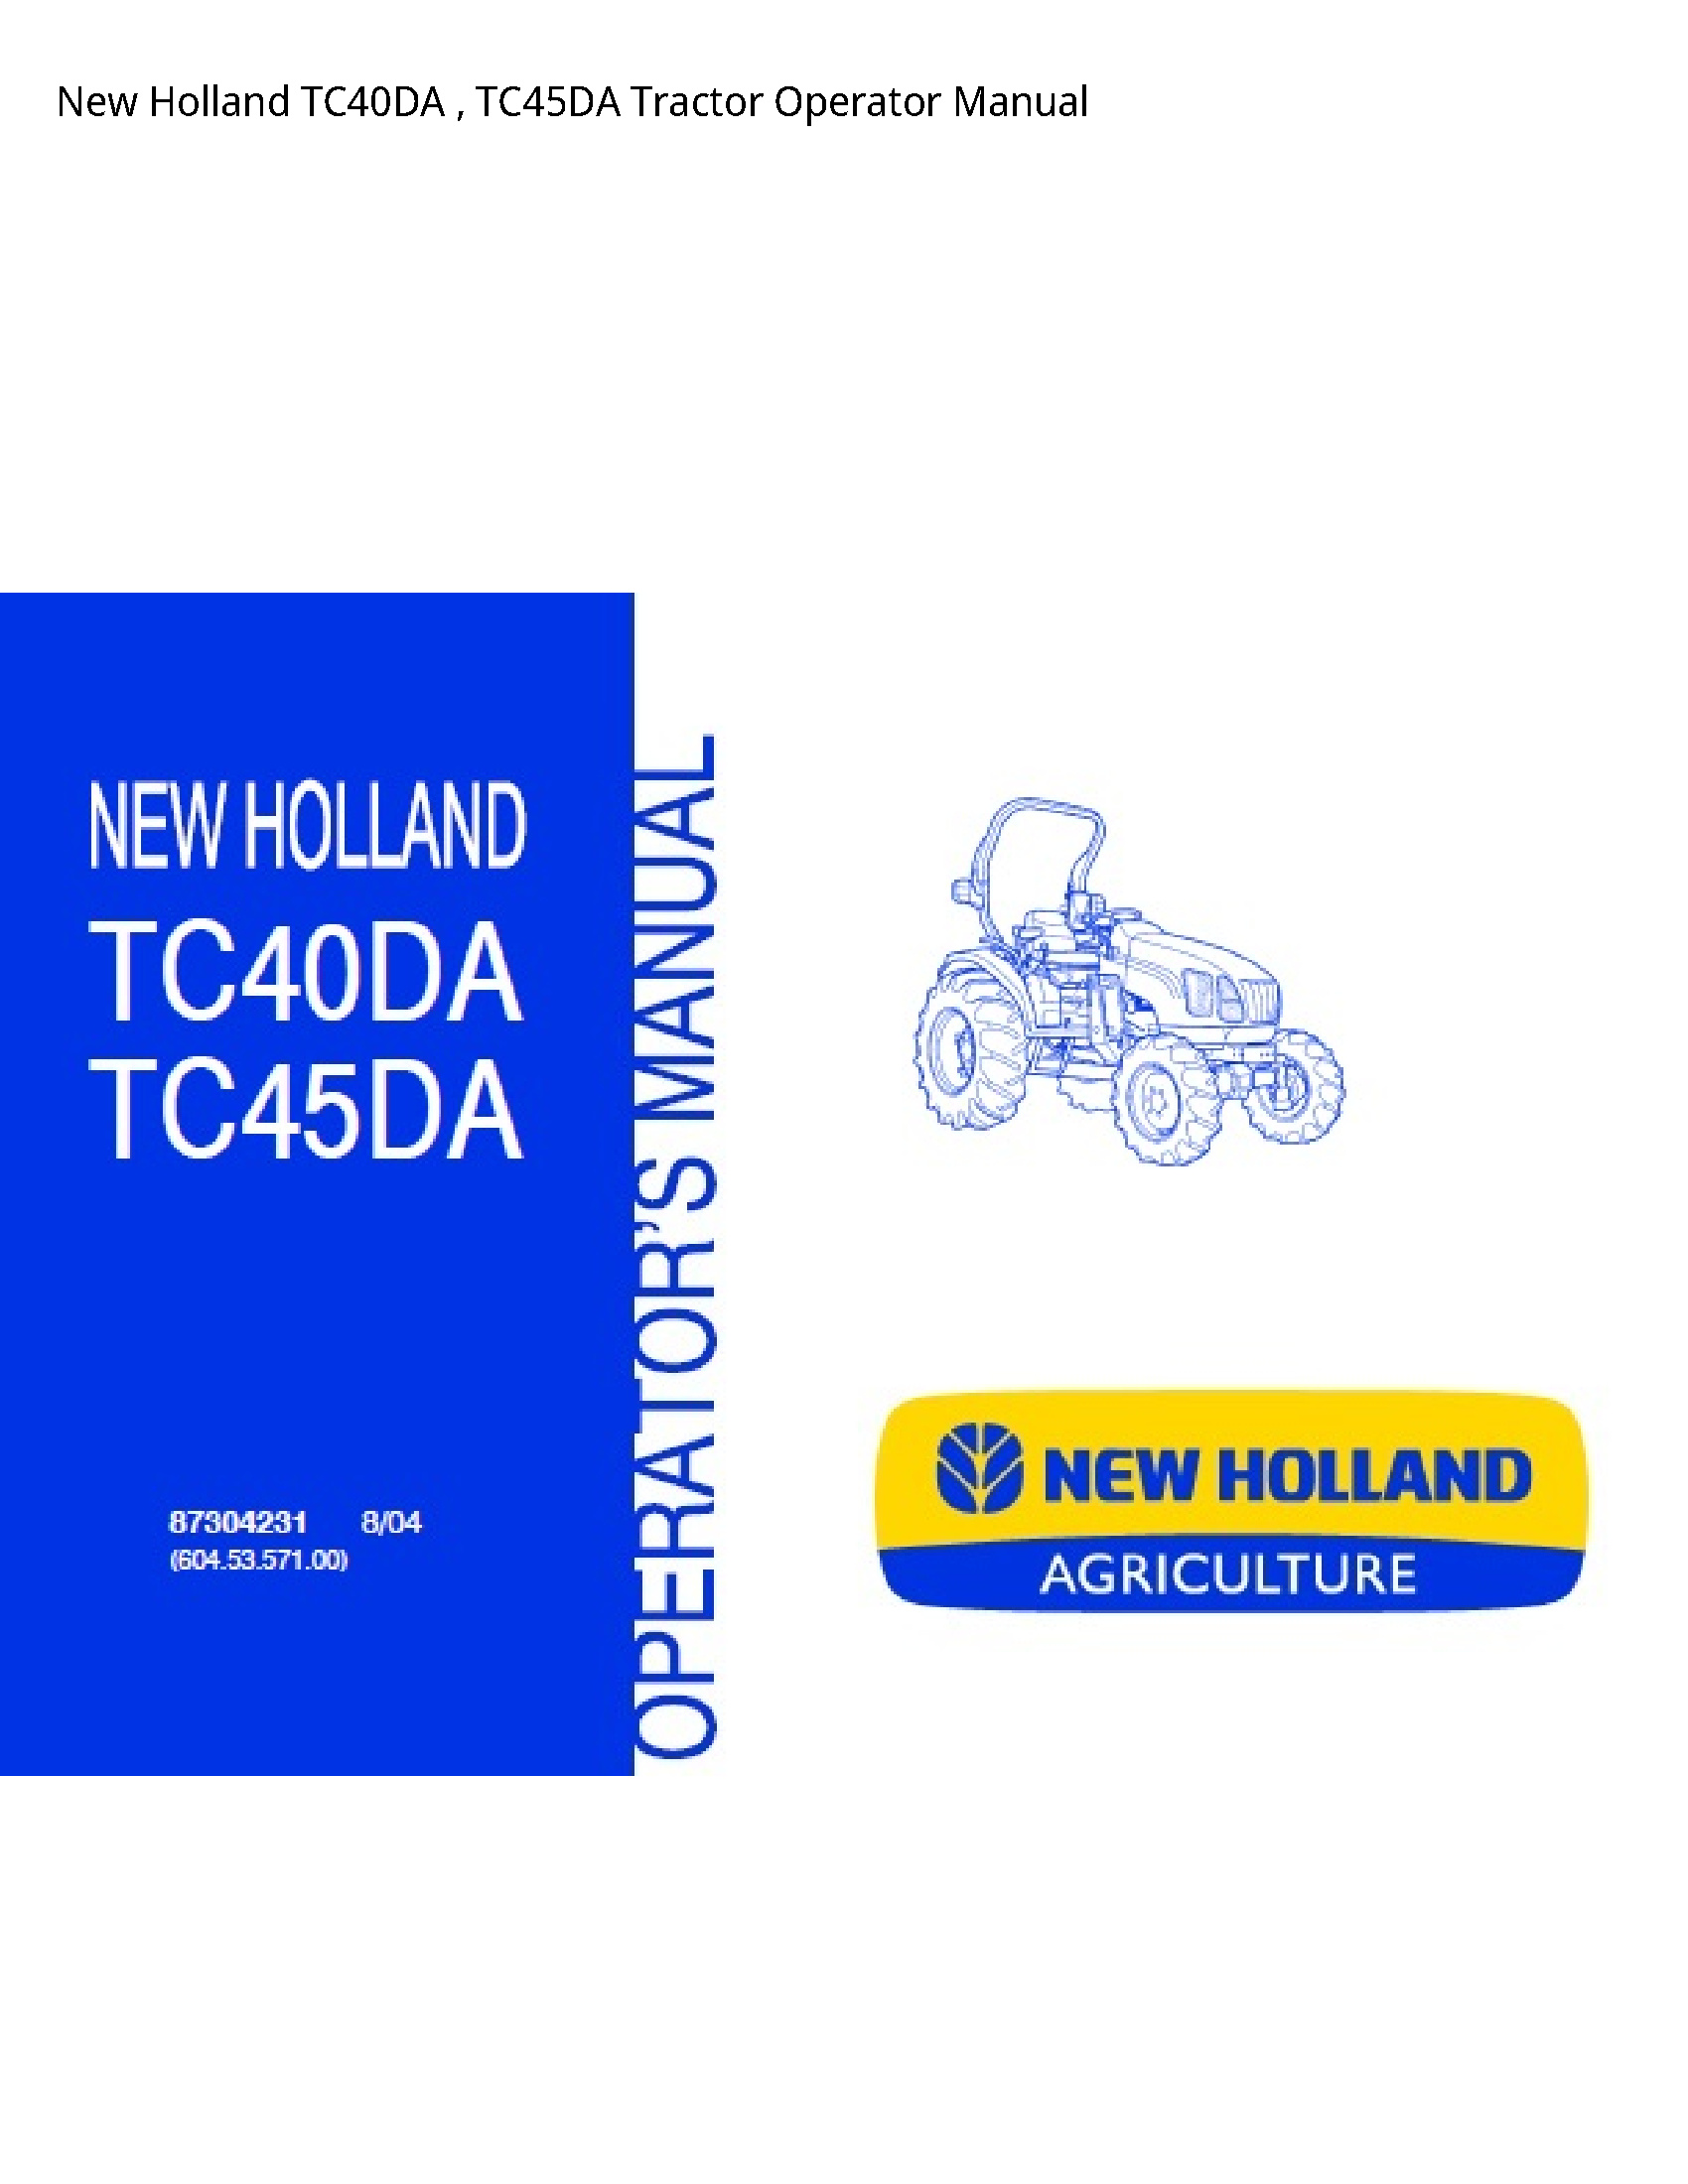 New Holland TC40DA Tractor Operator manual